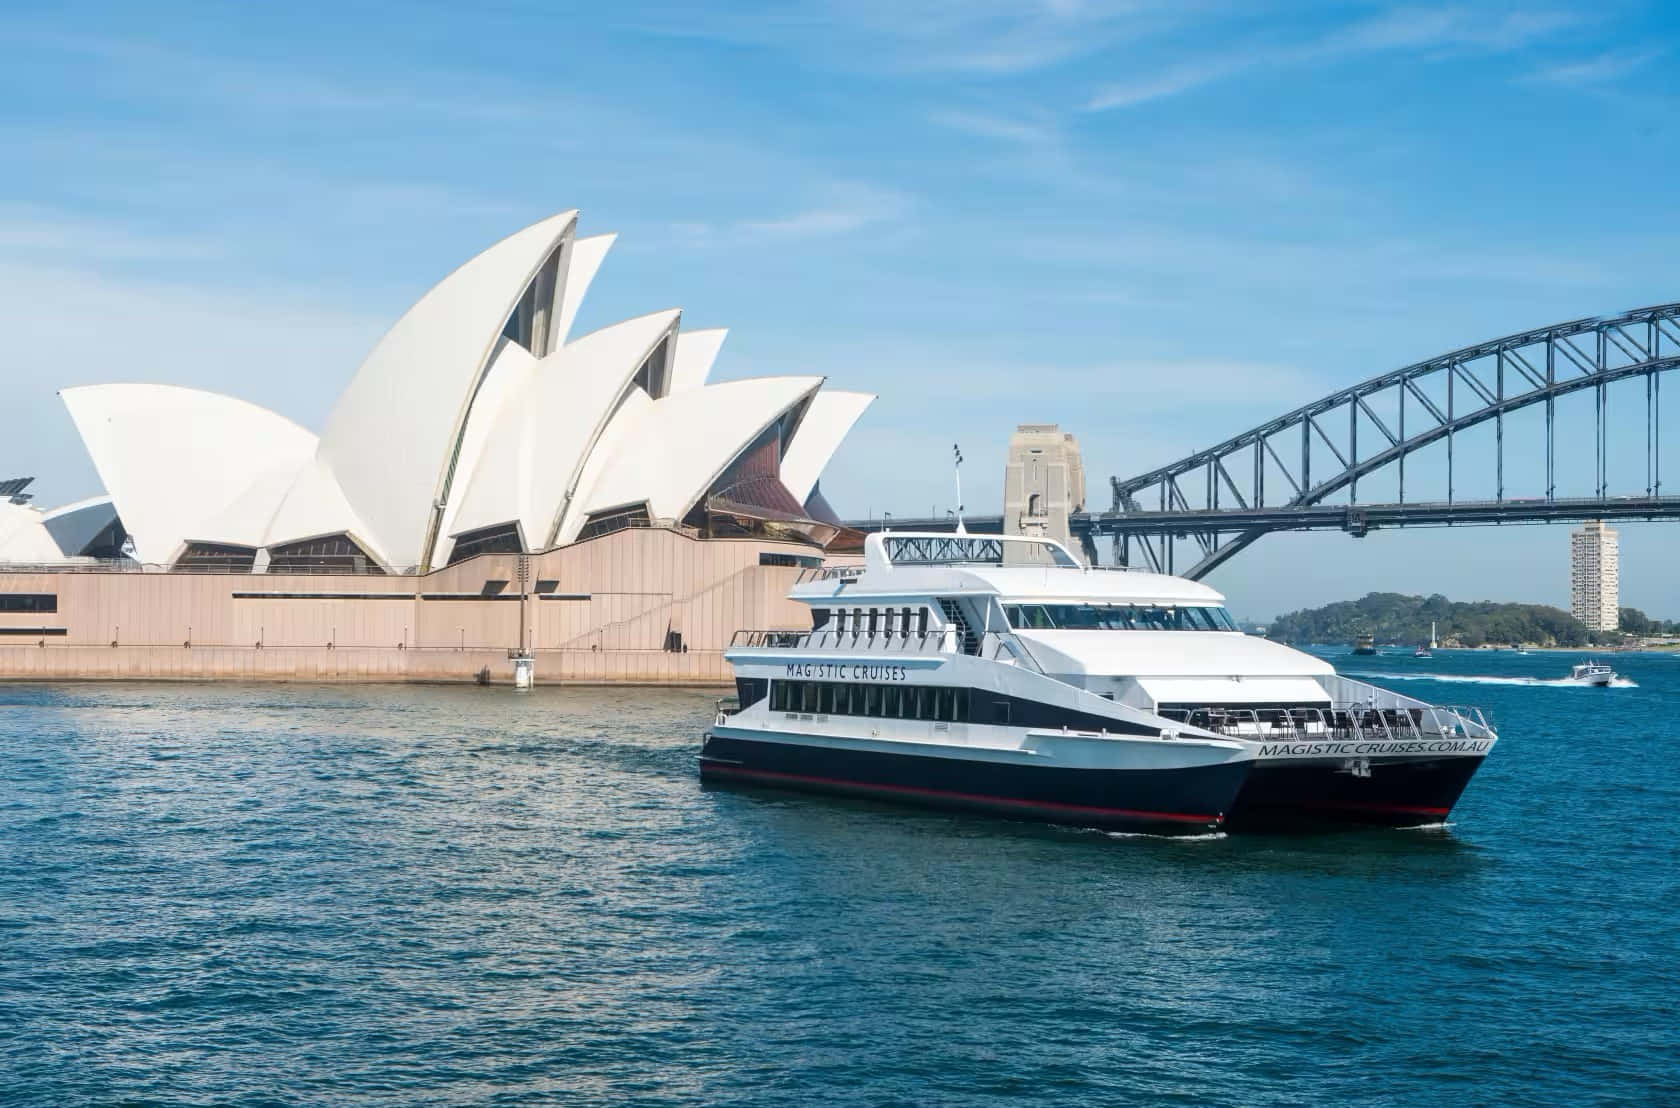 Sydney Opera Houseand Harbour Cruise Wallpaper